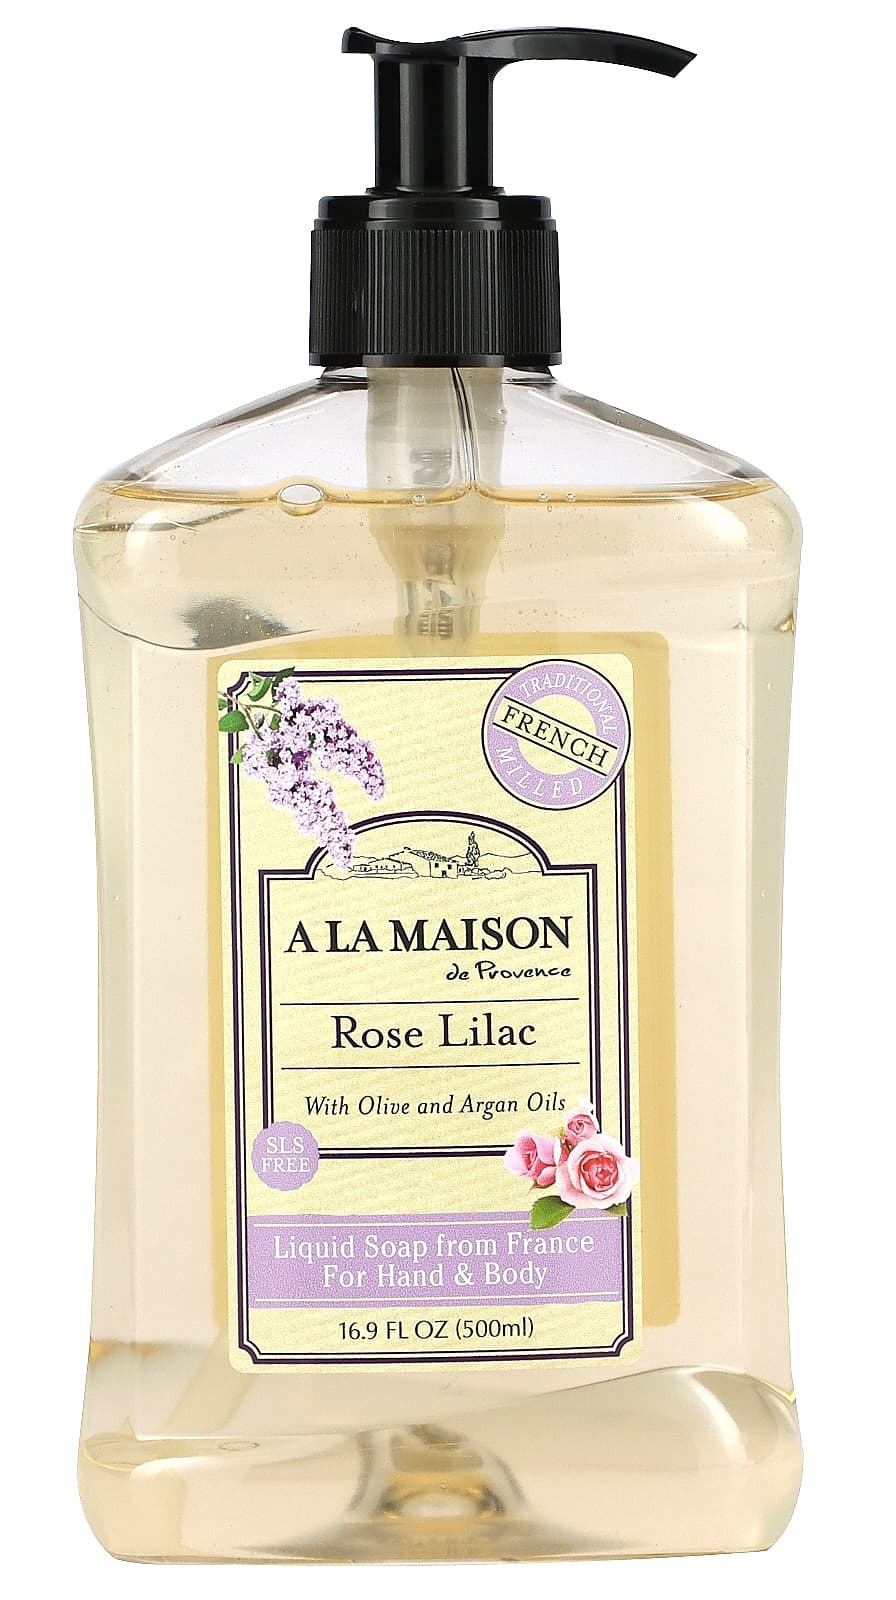 A La Maison de Provence Liquid Soap For Hand & Body, Rose Lilac